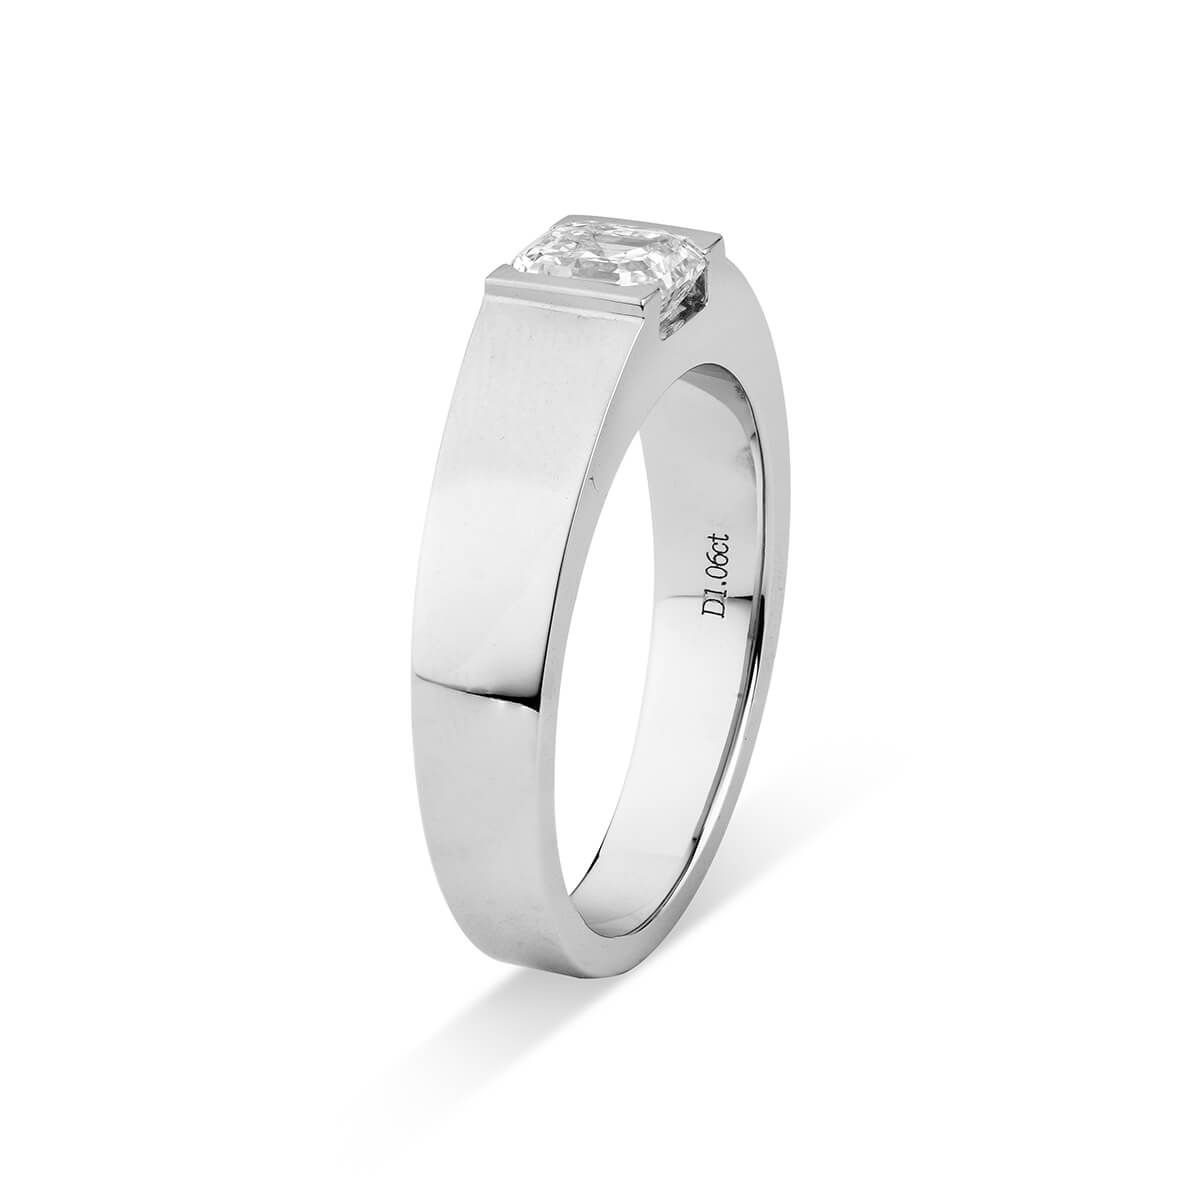  White Diamond Ring, 1.06 Carat, Asscher shape, GIA Certified, 7262340628